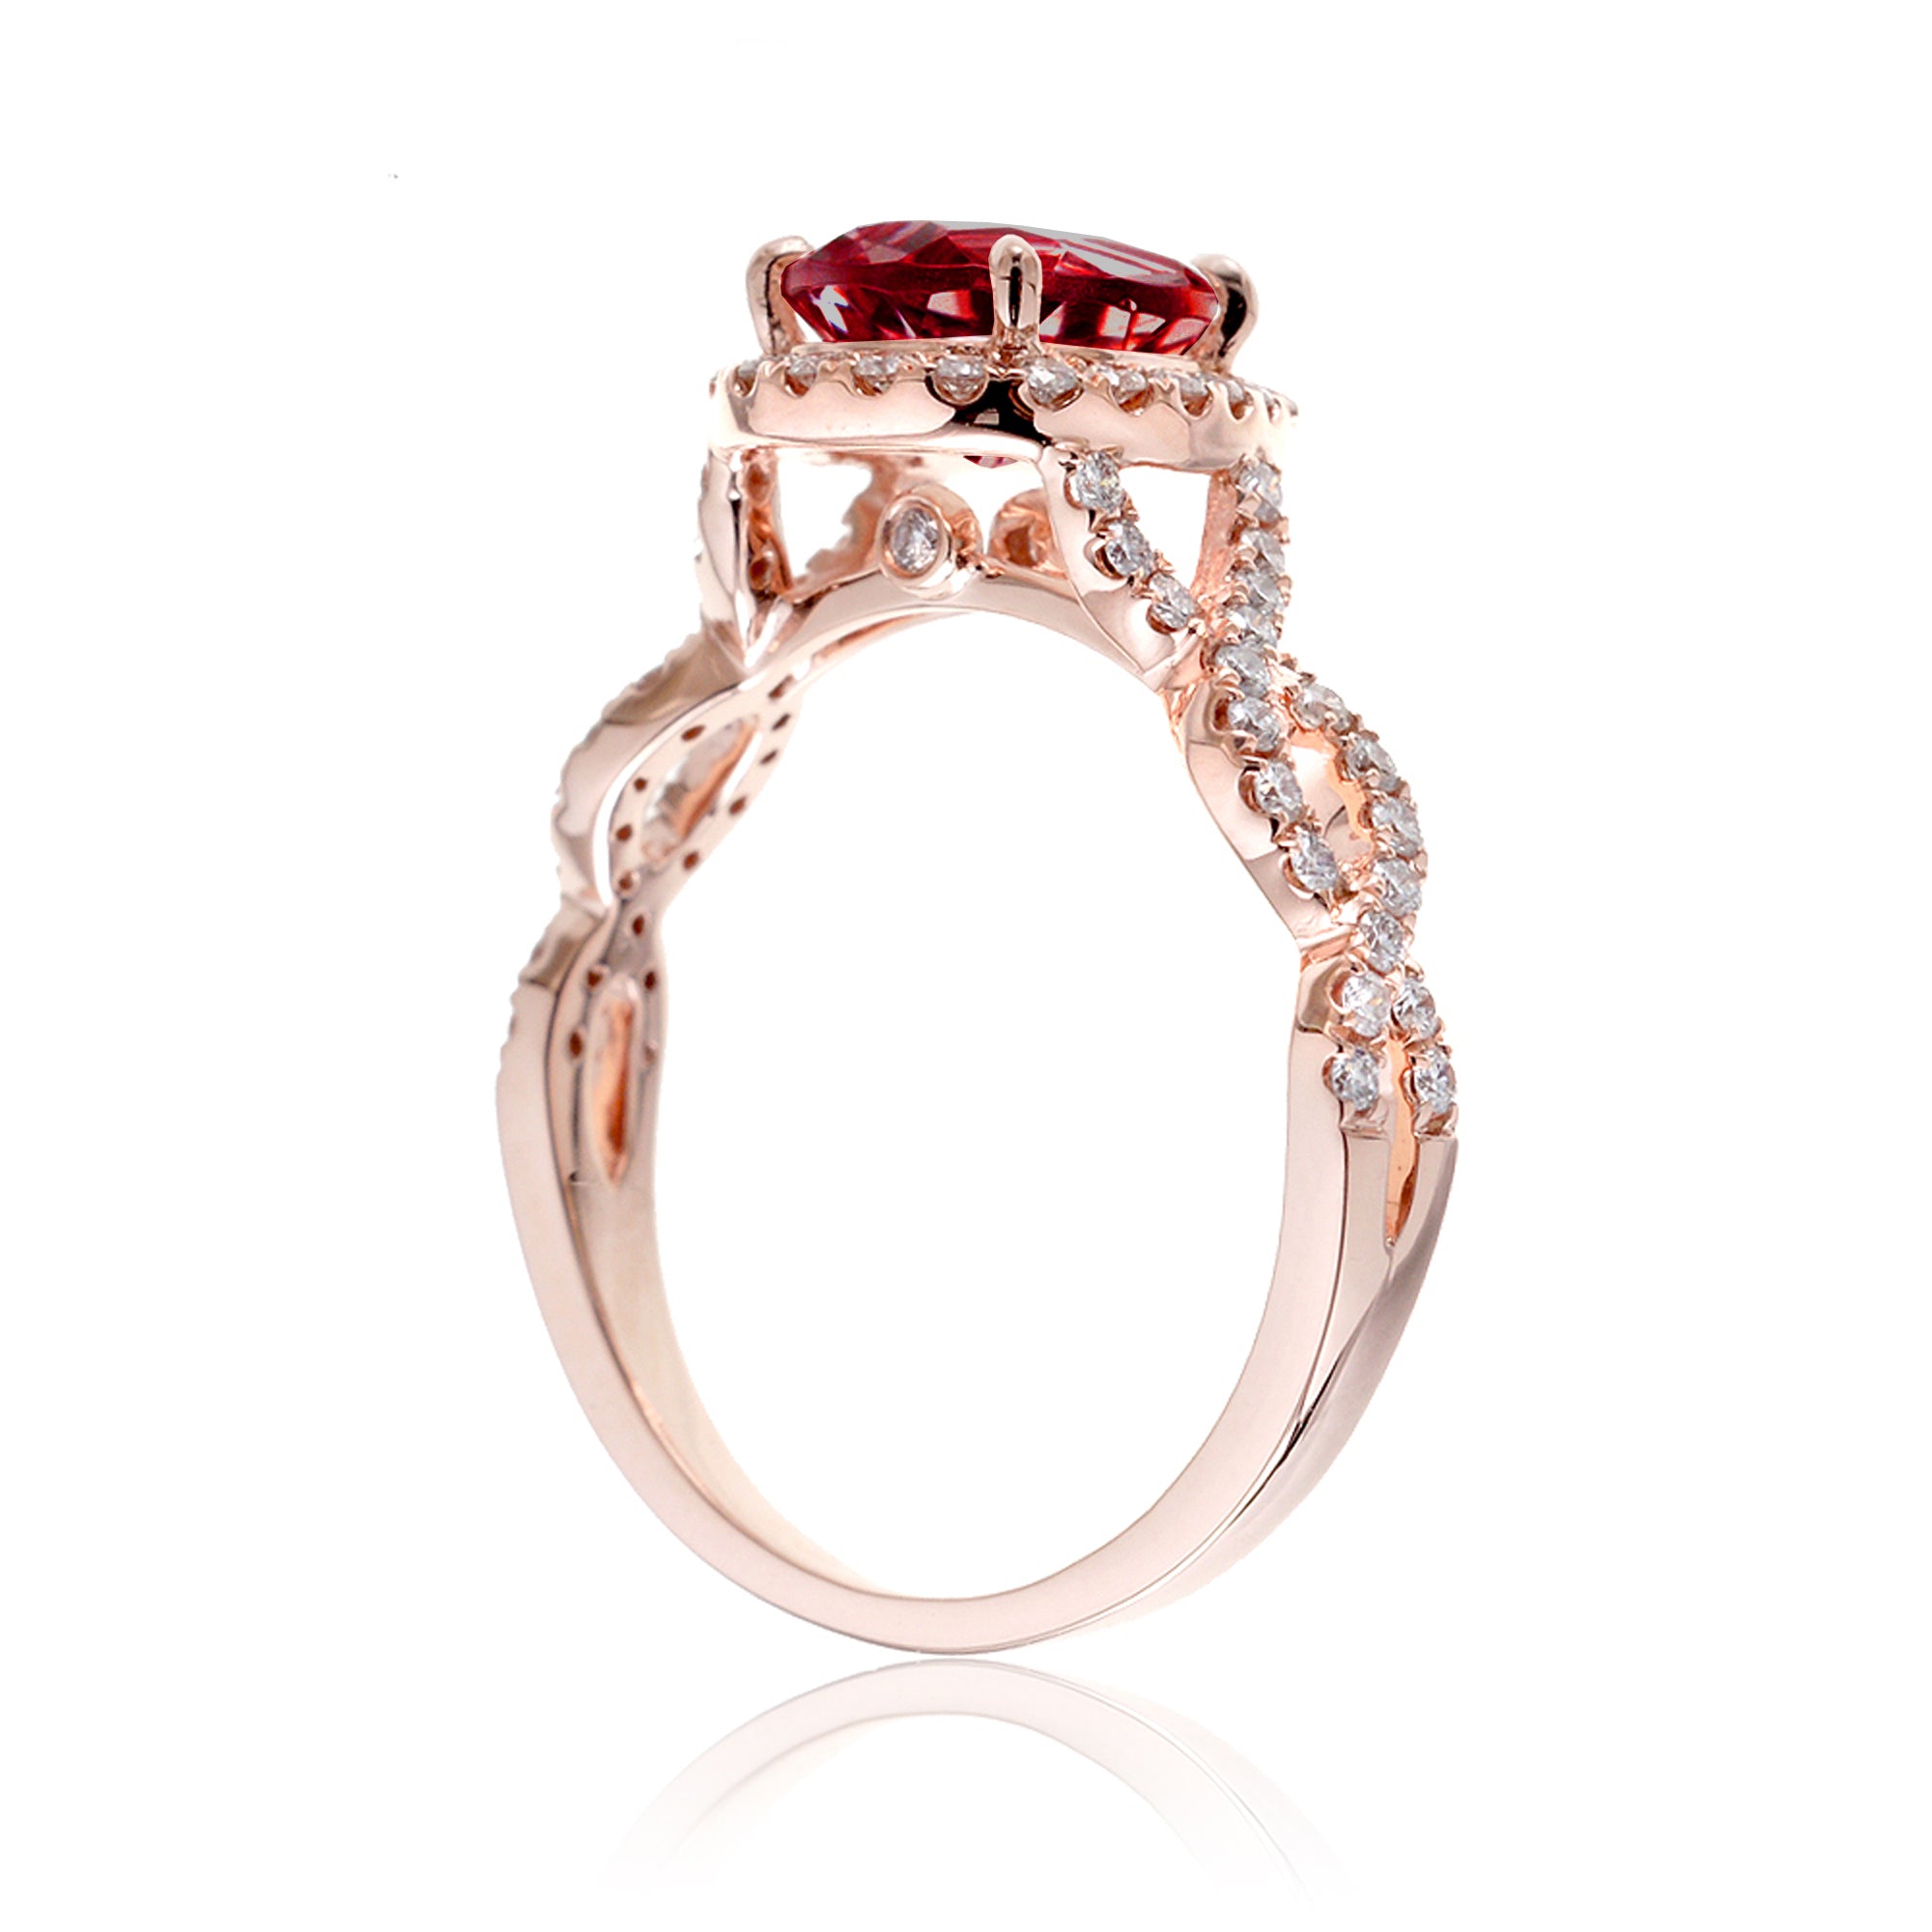 Ruby diamond twist band ring rose gold